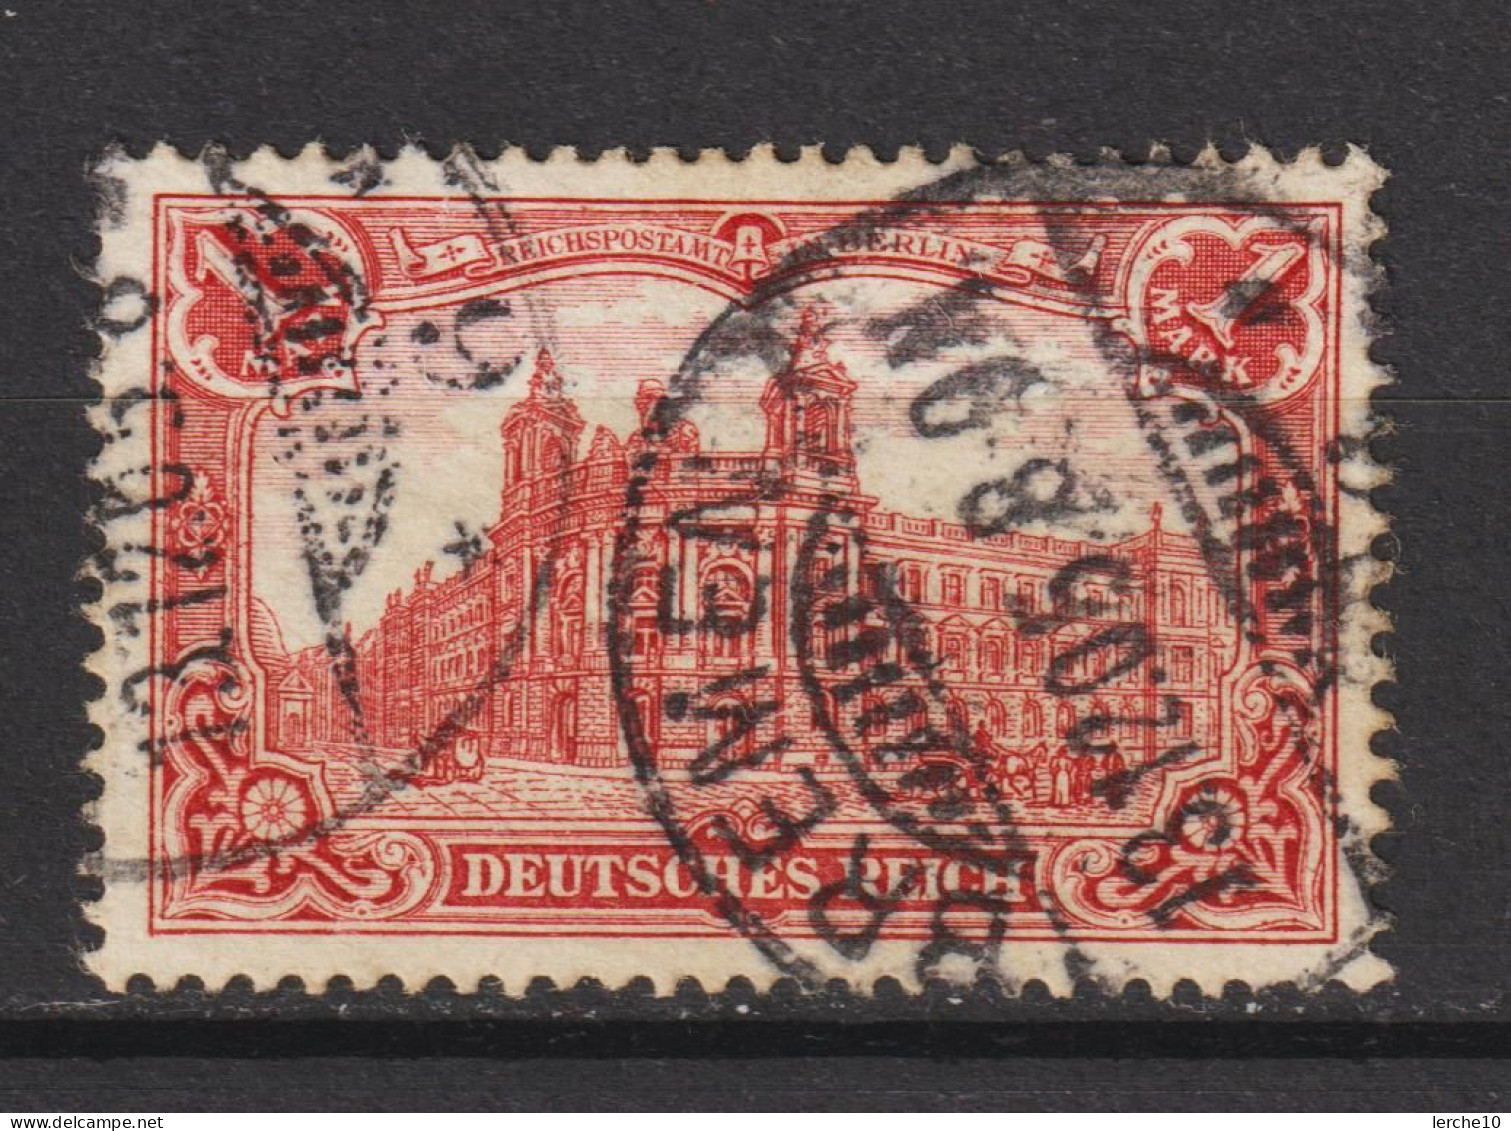 MiNr. 78 B Gestempelt - Used Stamps